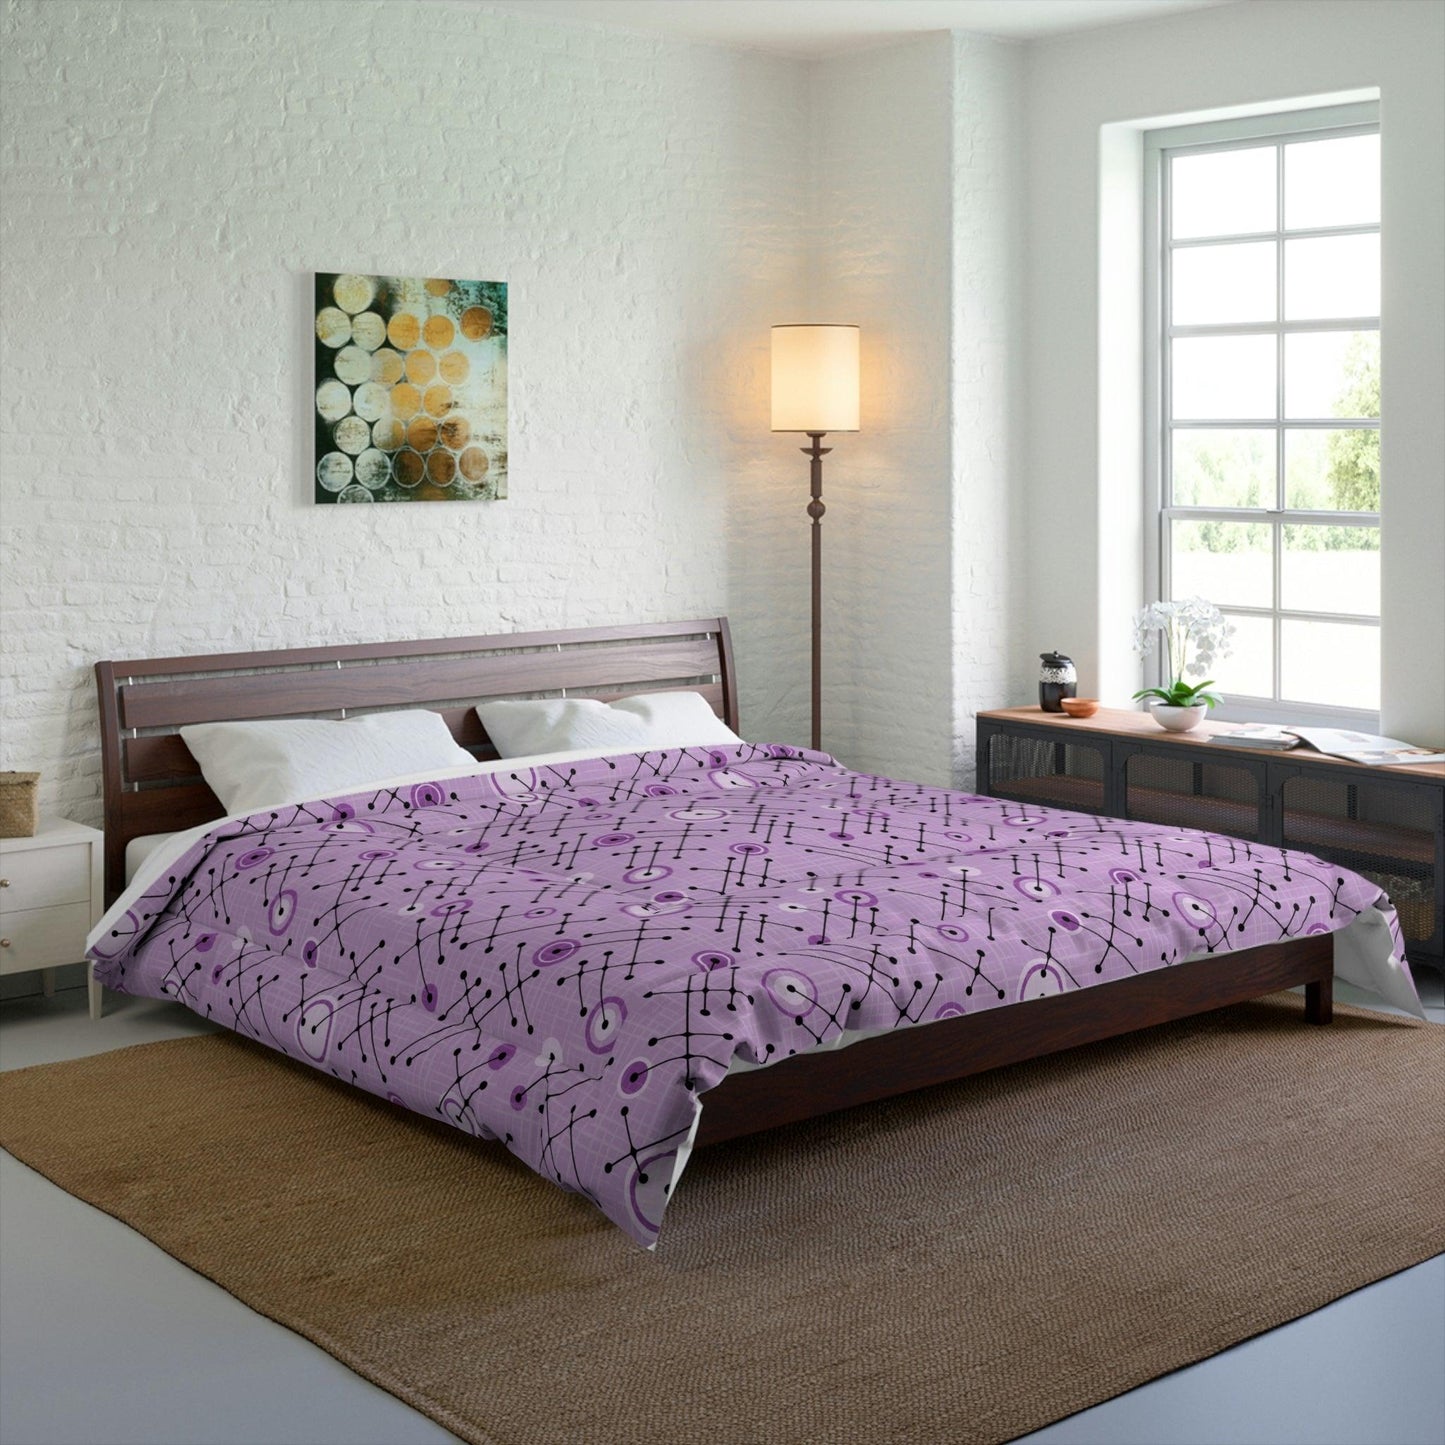 Retro 50s Eames Inspired Lines MCM Purple Comforter | lovevisionkarma.com